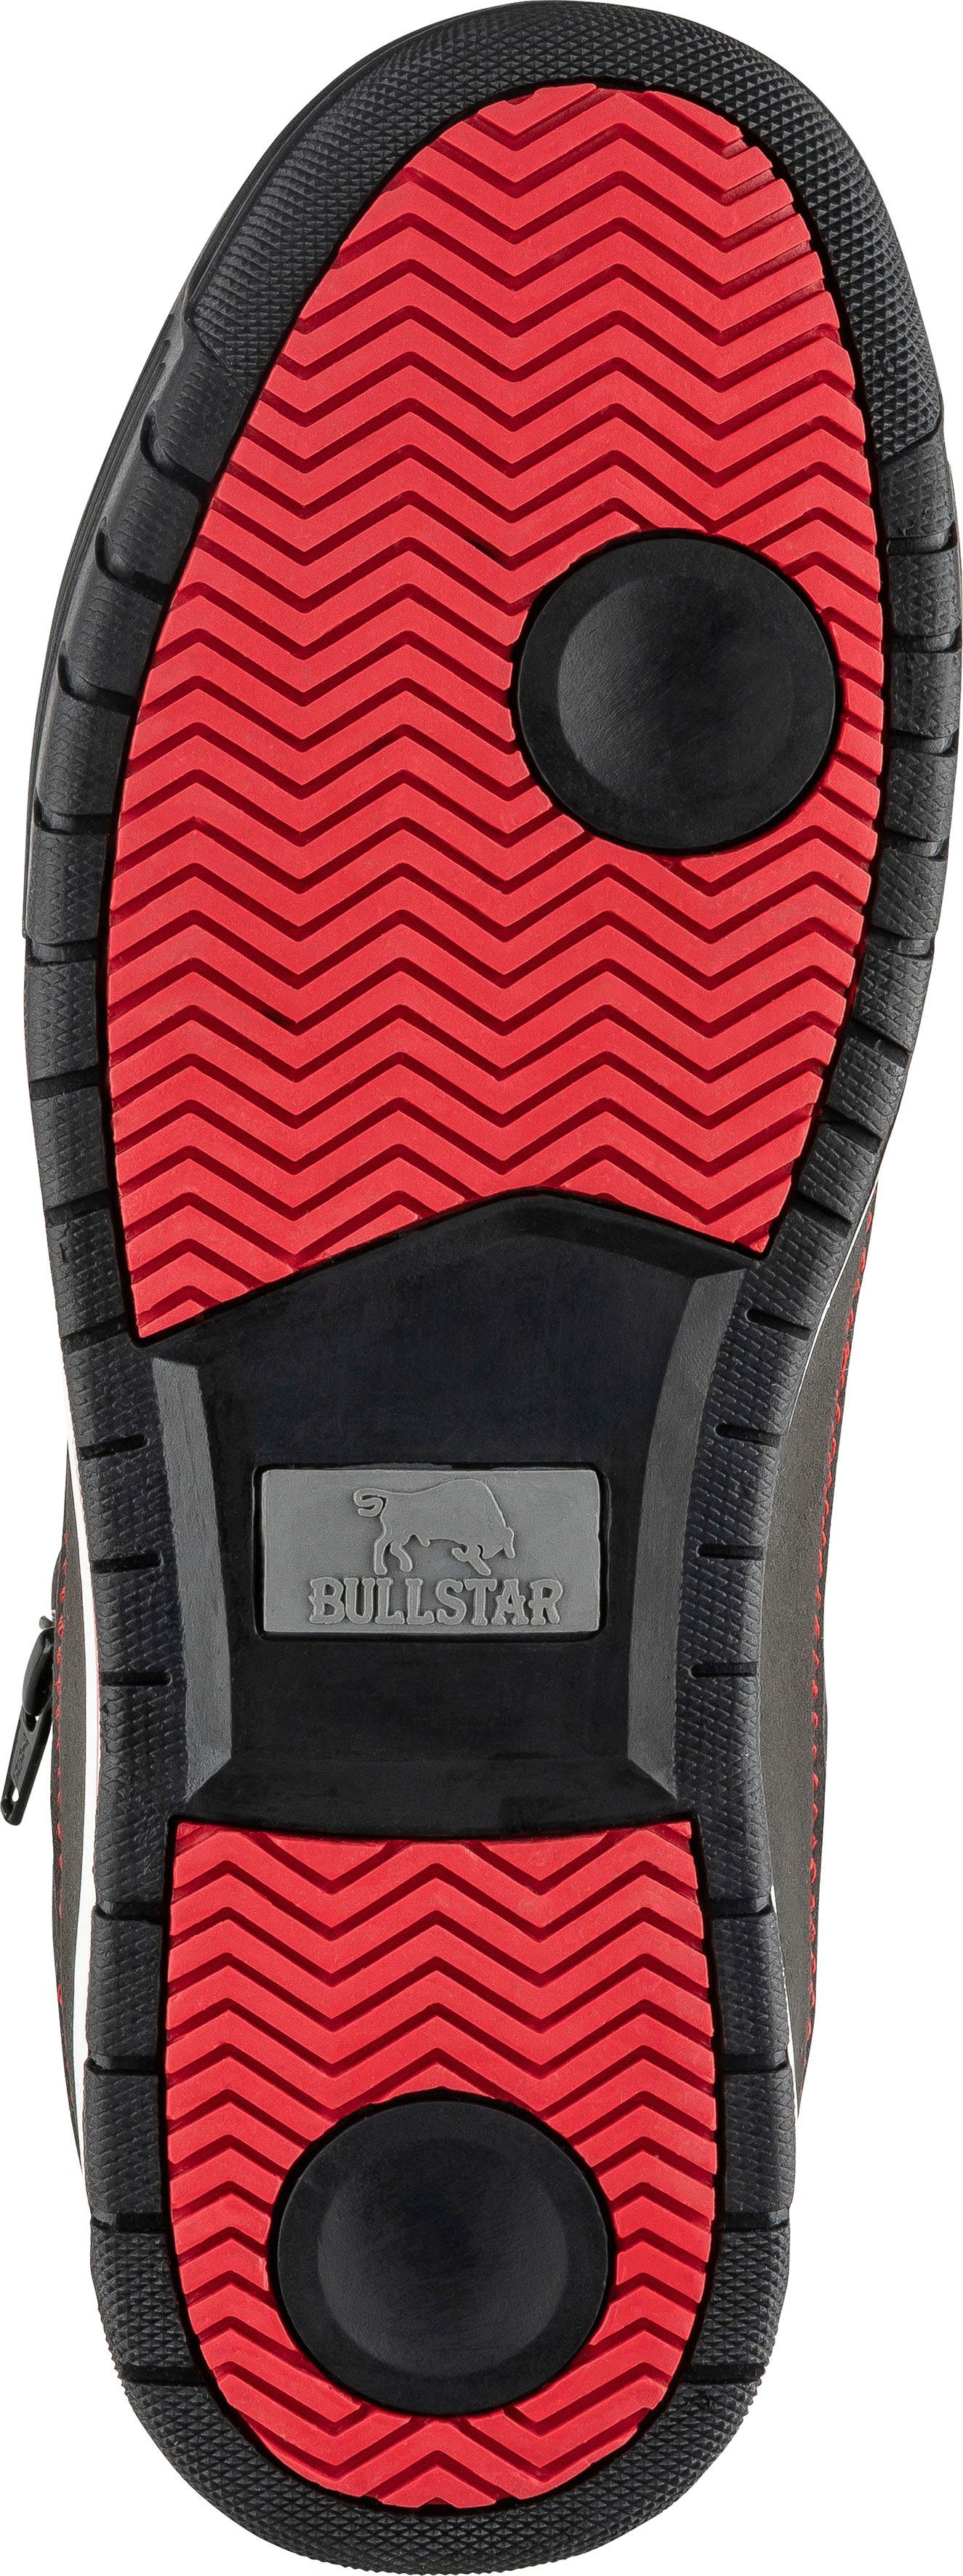 Bullstar JUMPX S1p Sicherheitsschuh rutschhemmend, reißfest, atmungsaktiv,  mit Stahlkappe